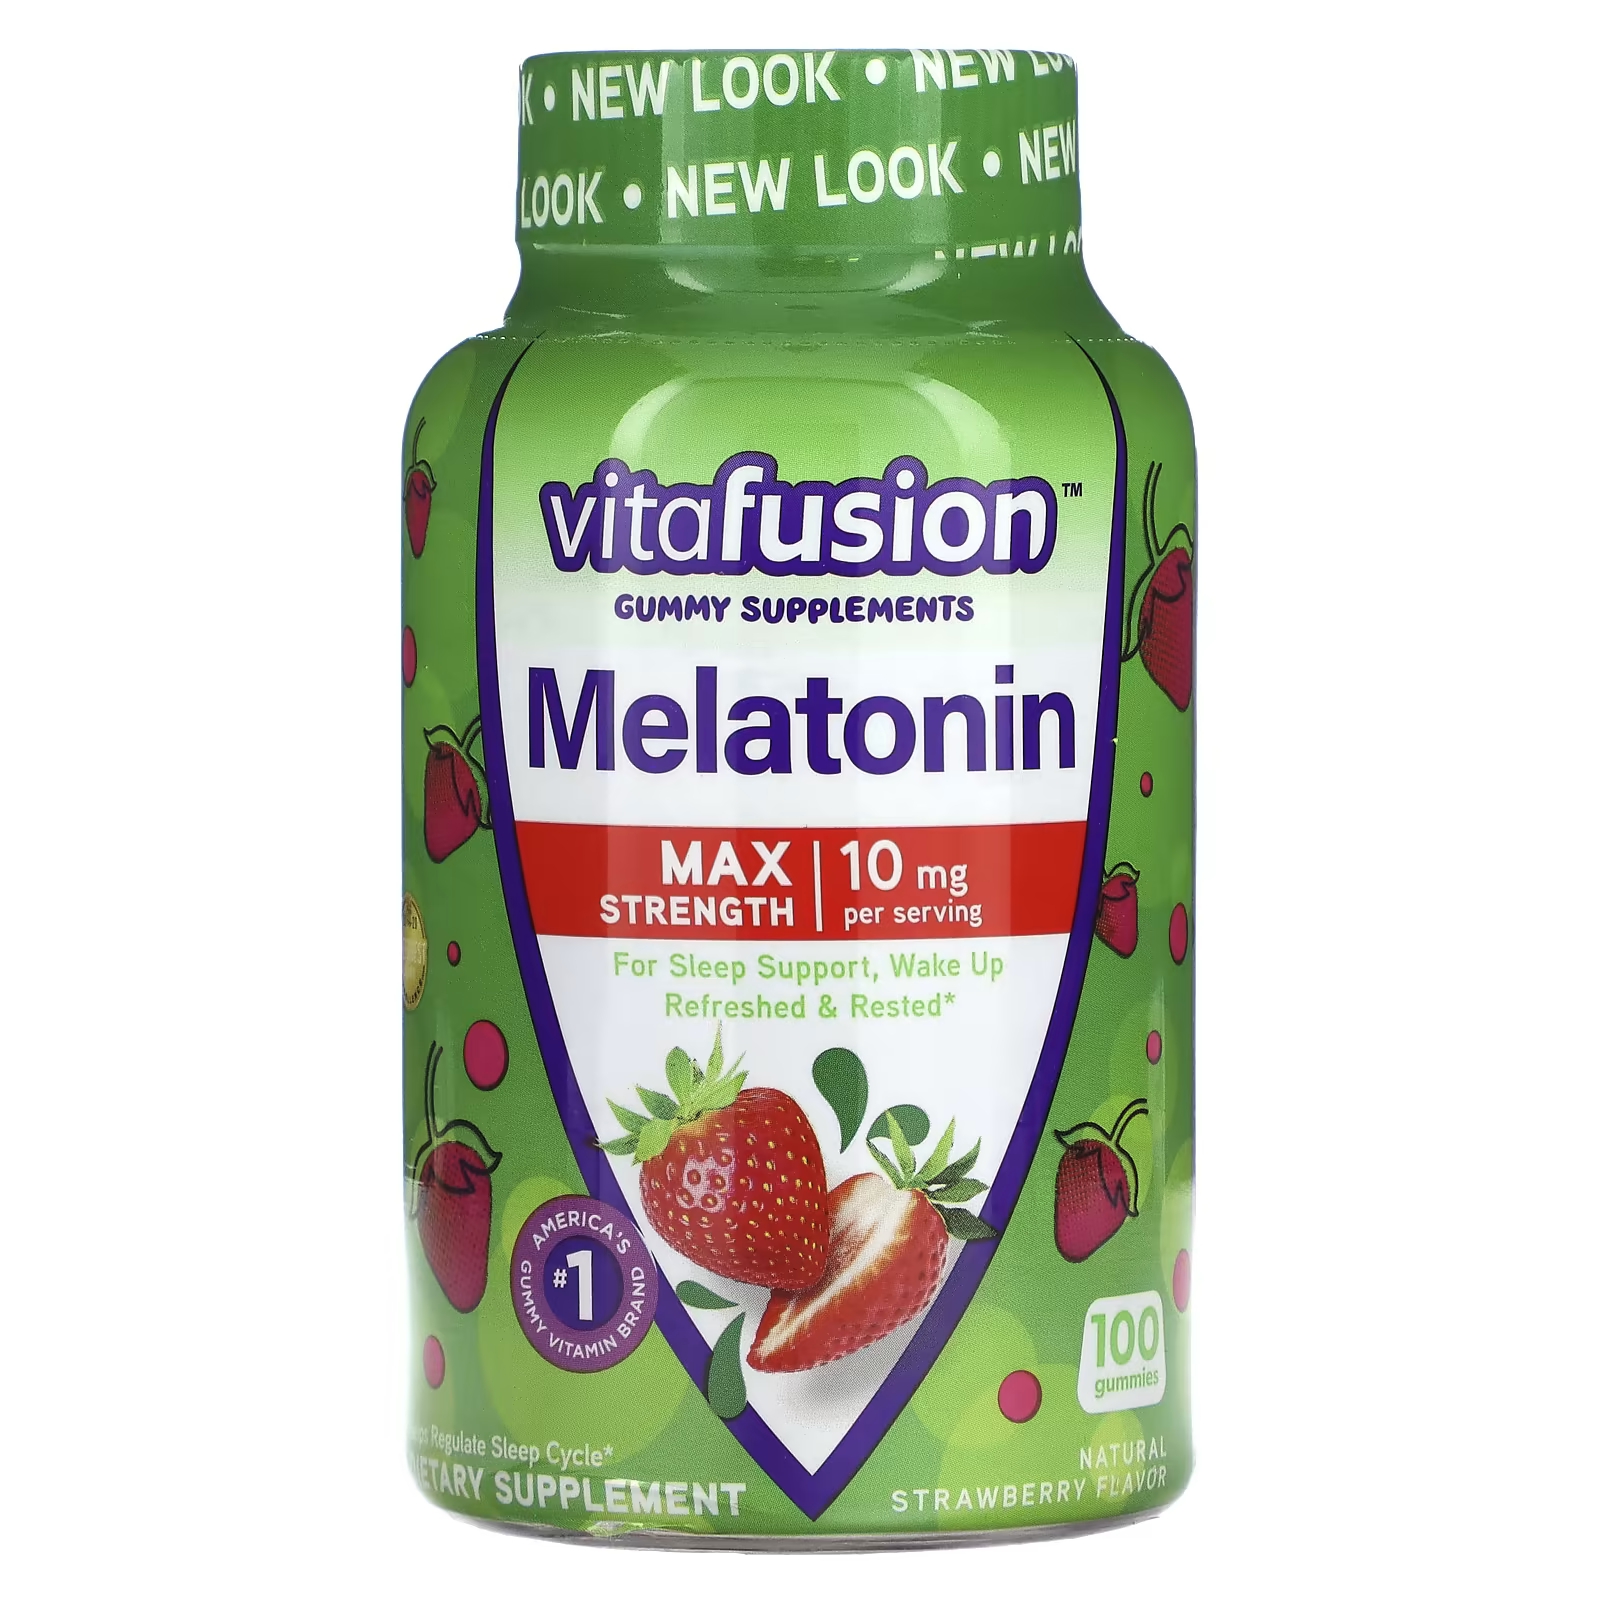 VitaFusion Max Strength Мелатонин Натуральная клубника 10 мг 100 жевательных таблеток (5 мг на жевательную конфету) olly бузина усиленная сила действия гроздь ягод 225 мг 60 жевательных мармеладок